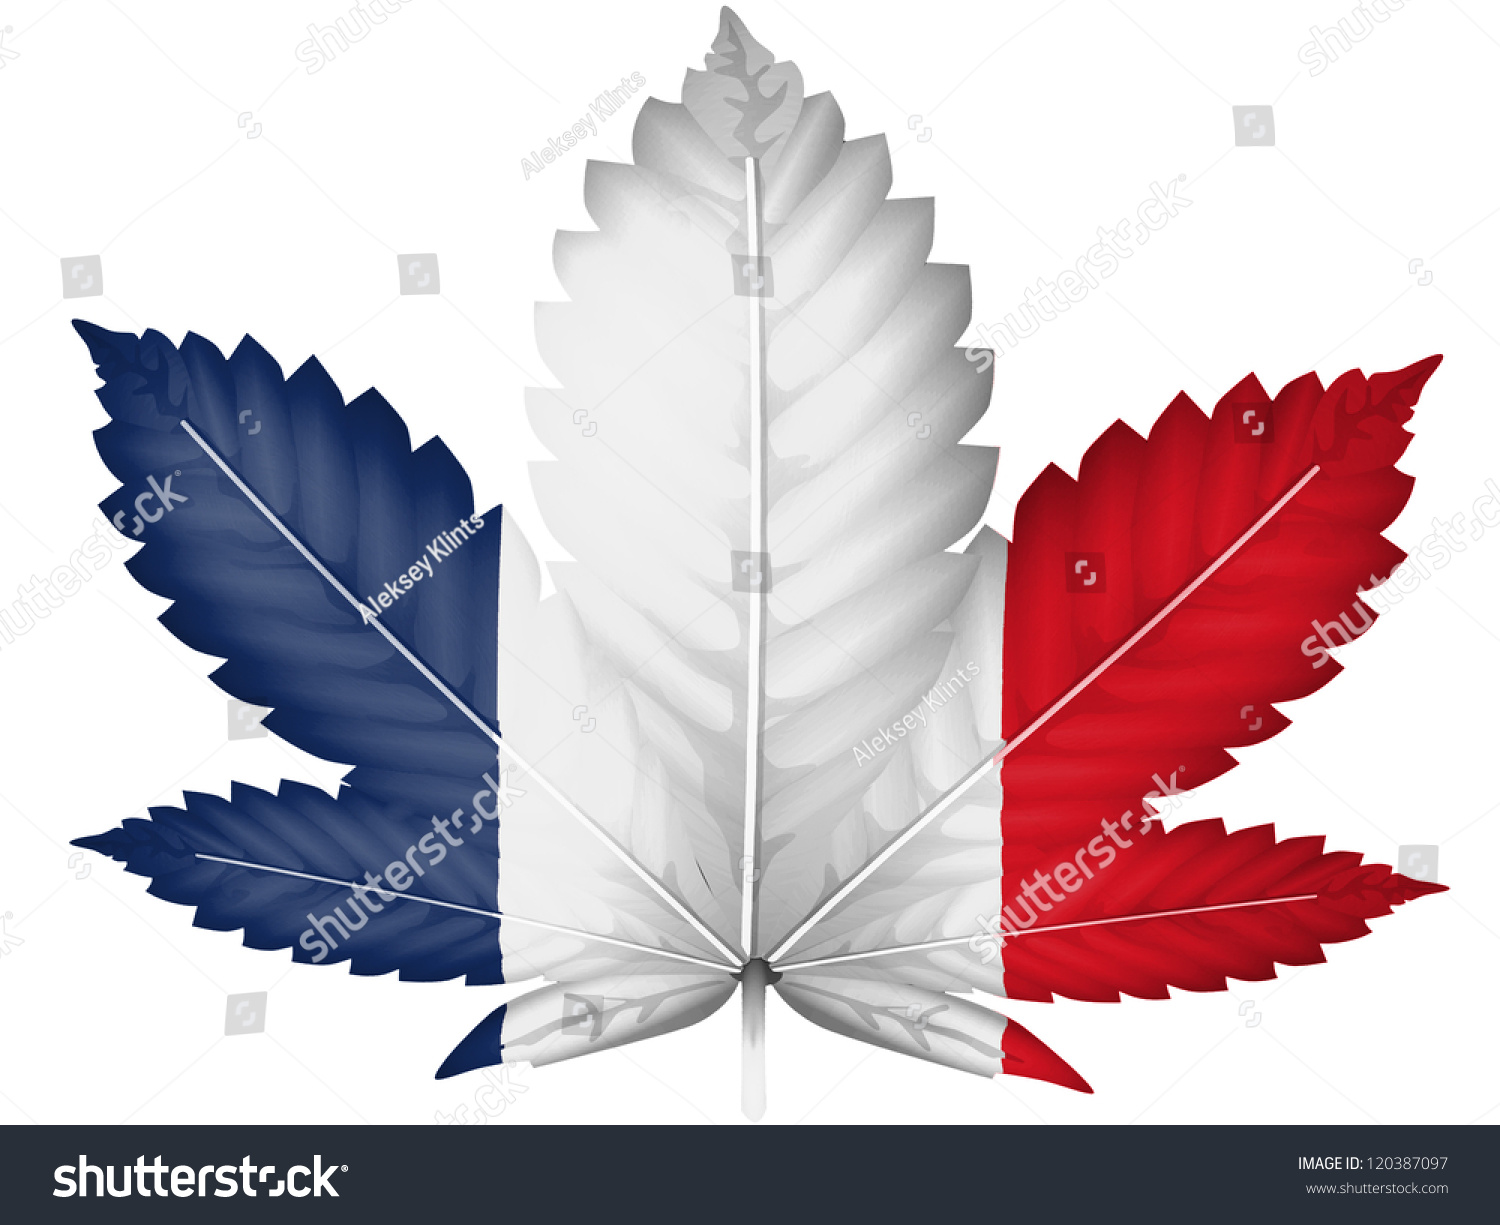 stock-photo-the-french-flag-painted-on-cannabis-or-marijuana-leaf-120387097.jpg